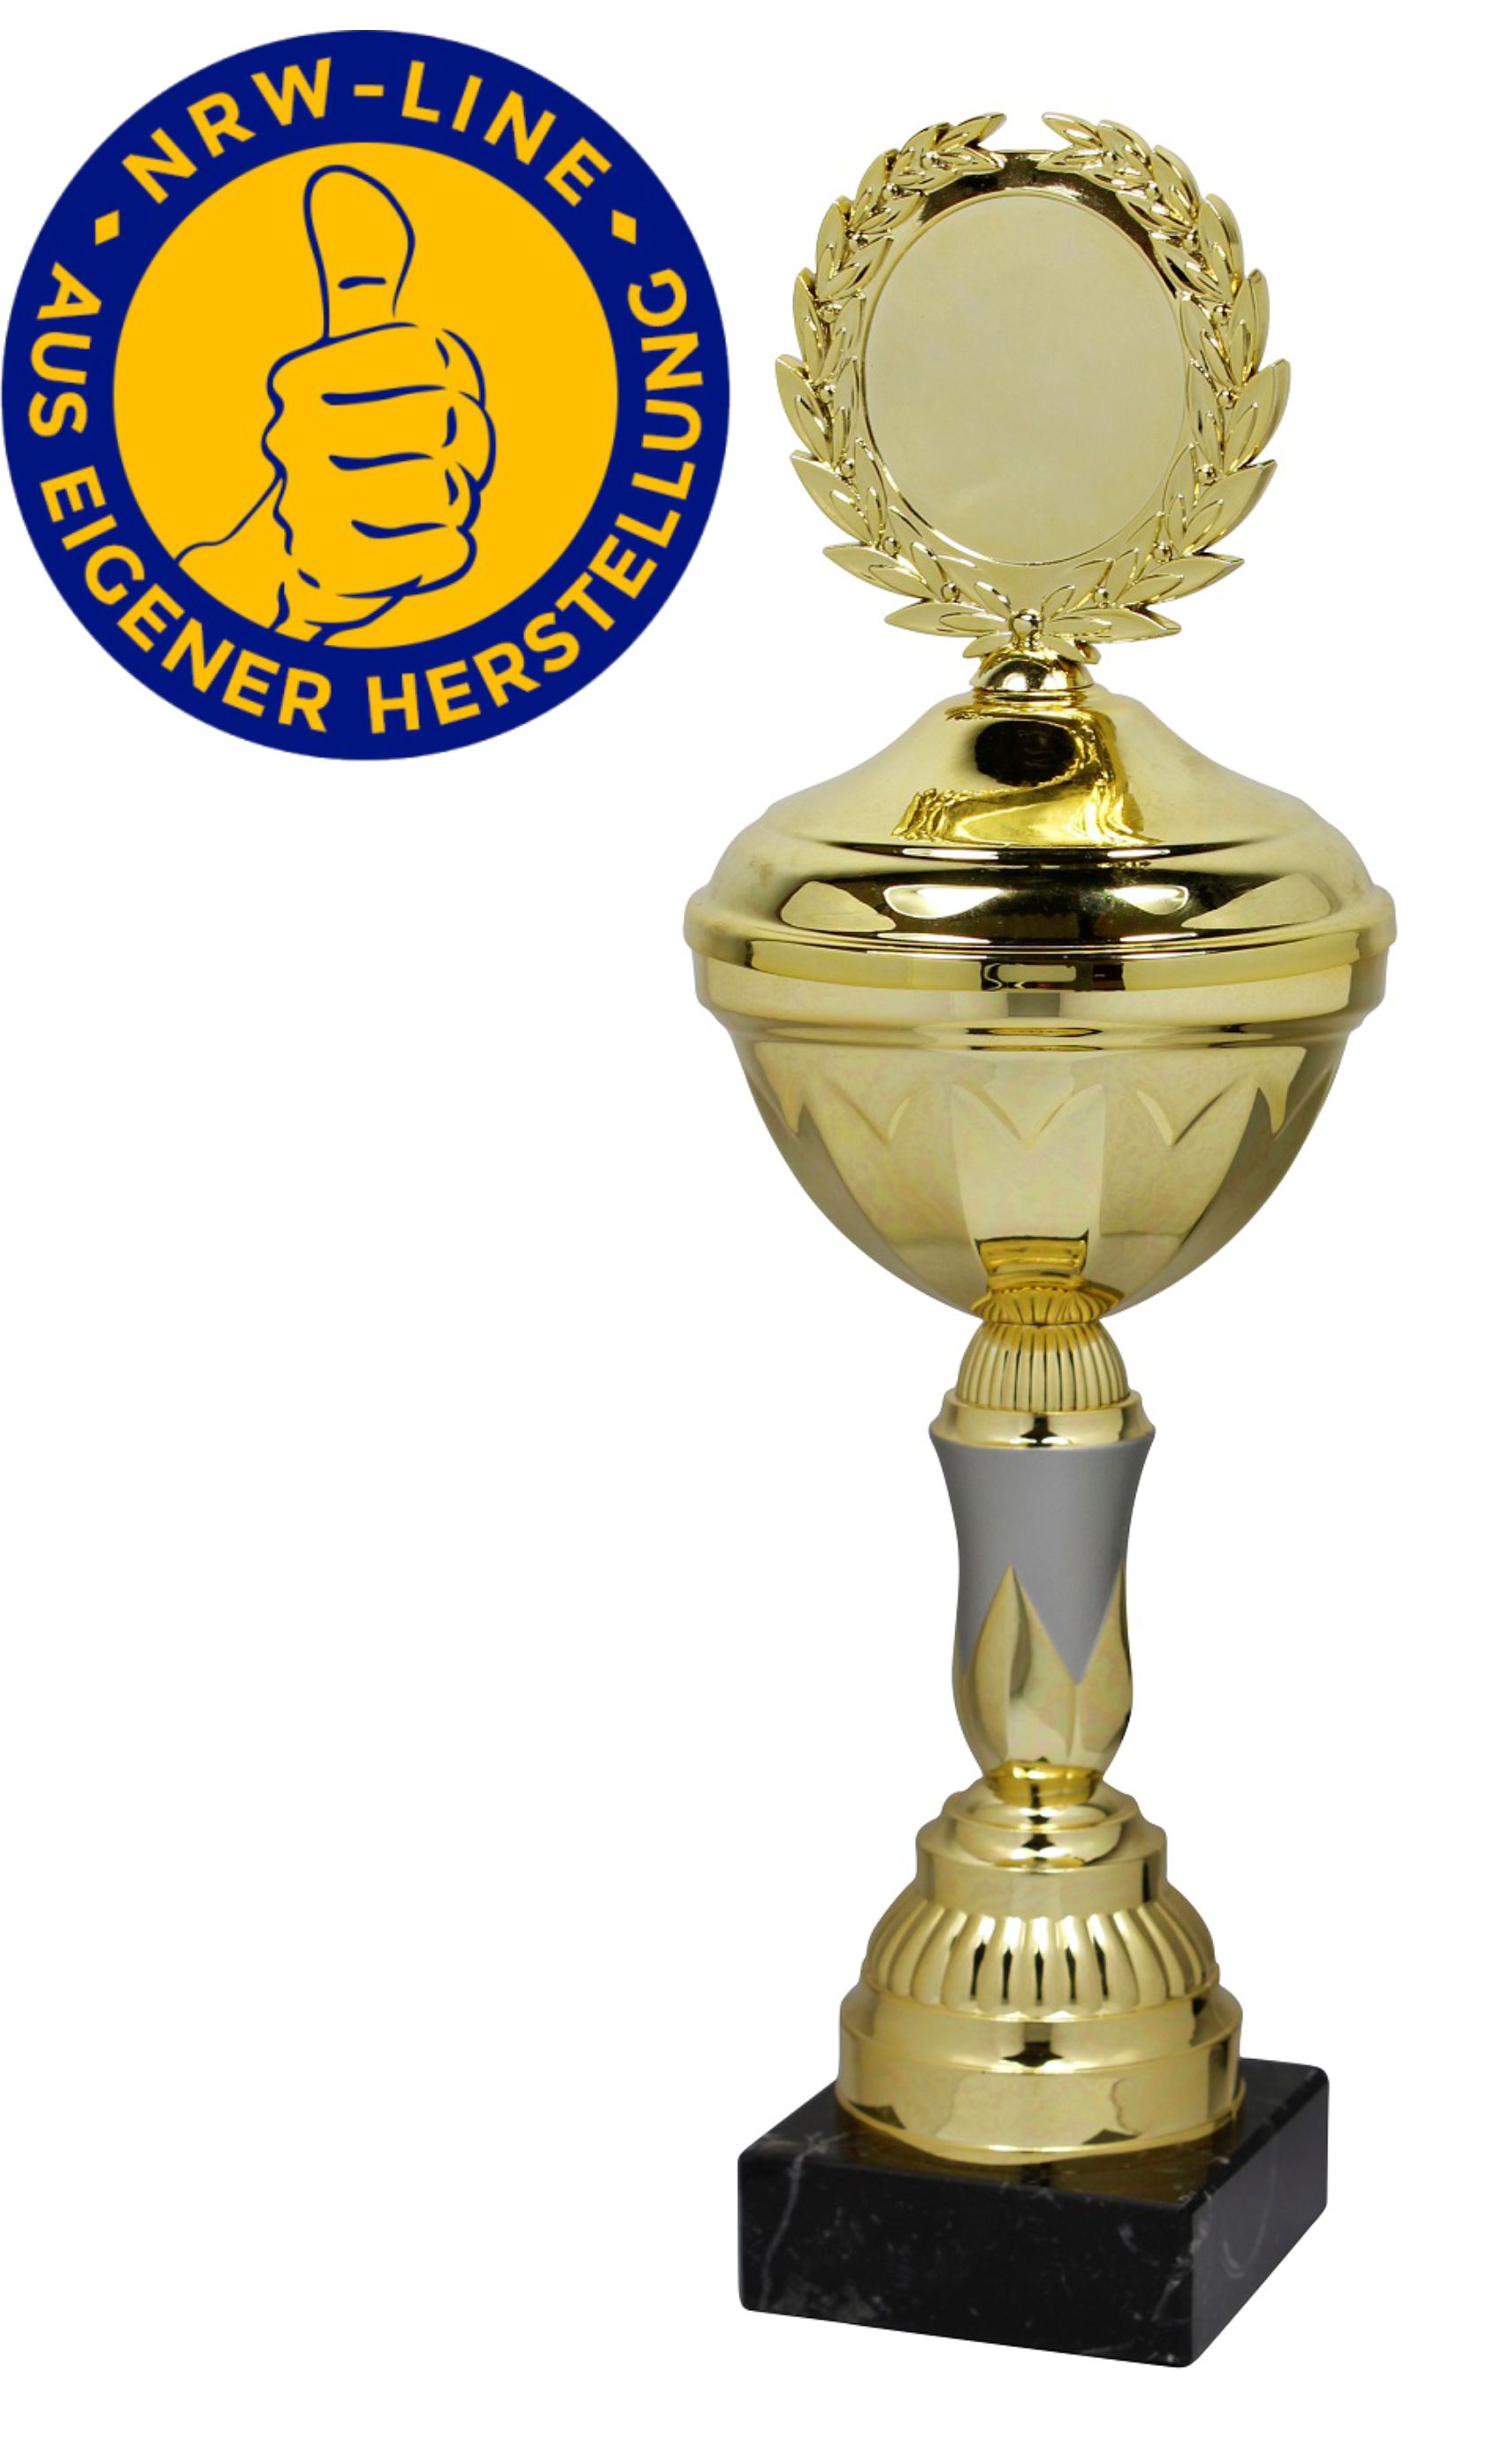 Pokal P700 NRW Line inkl. Gravur und Emblem 32,5 cm